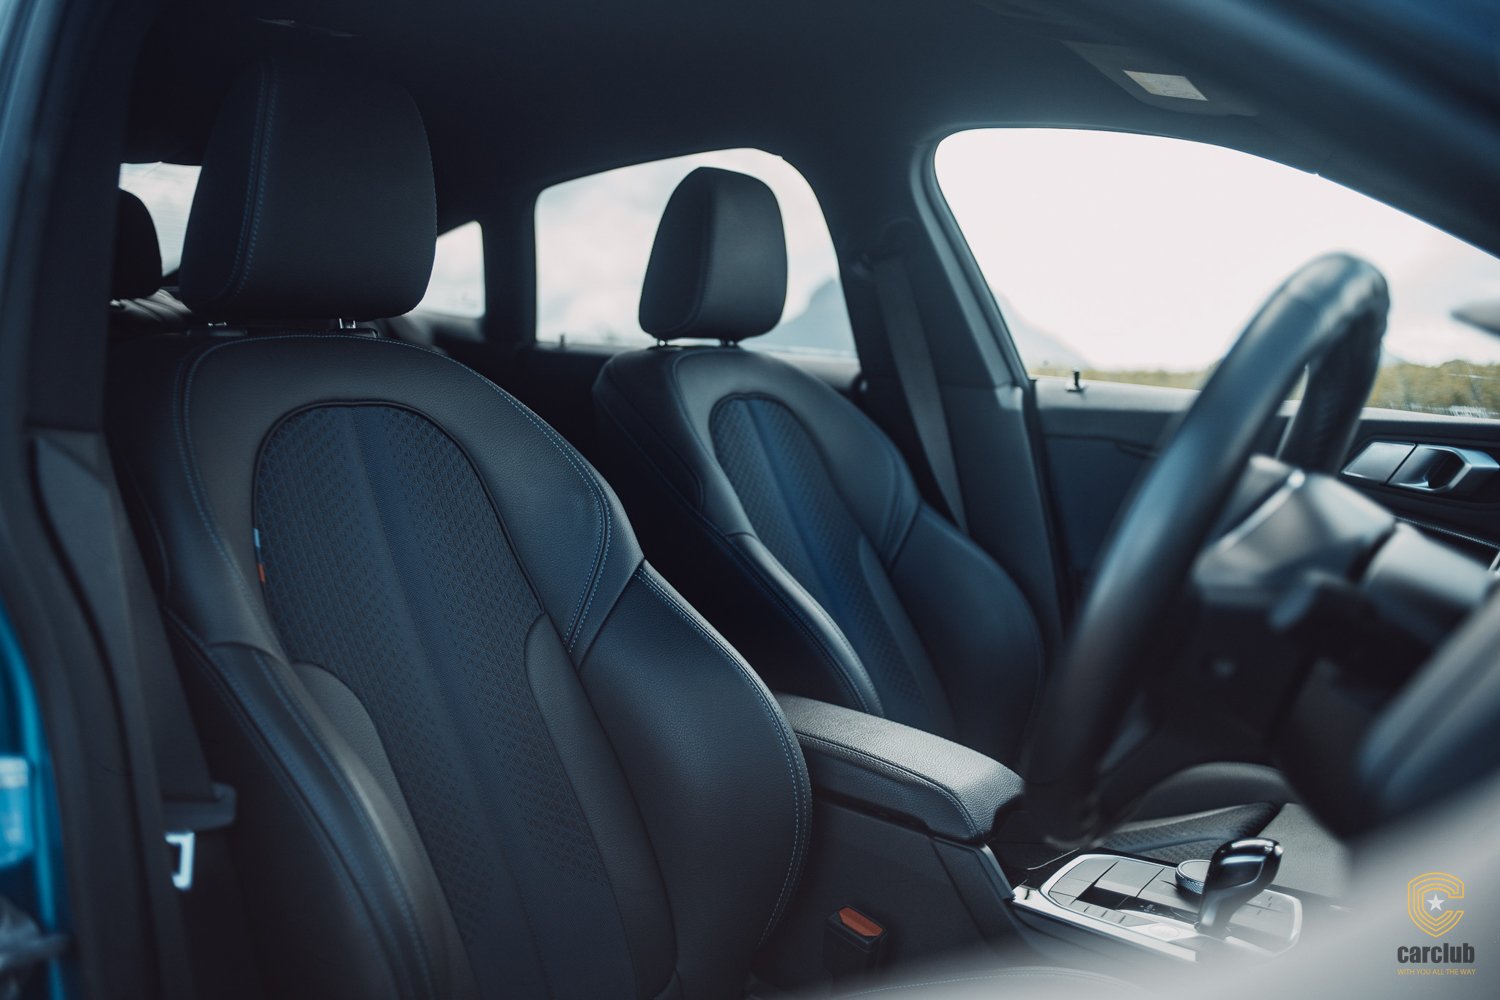 BMW 220i interior - Seats